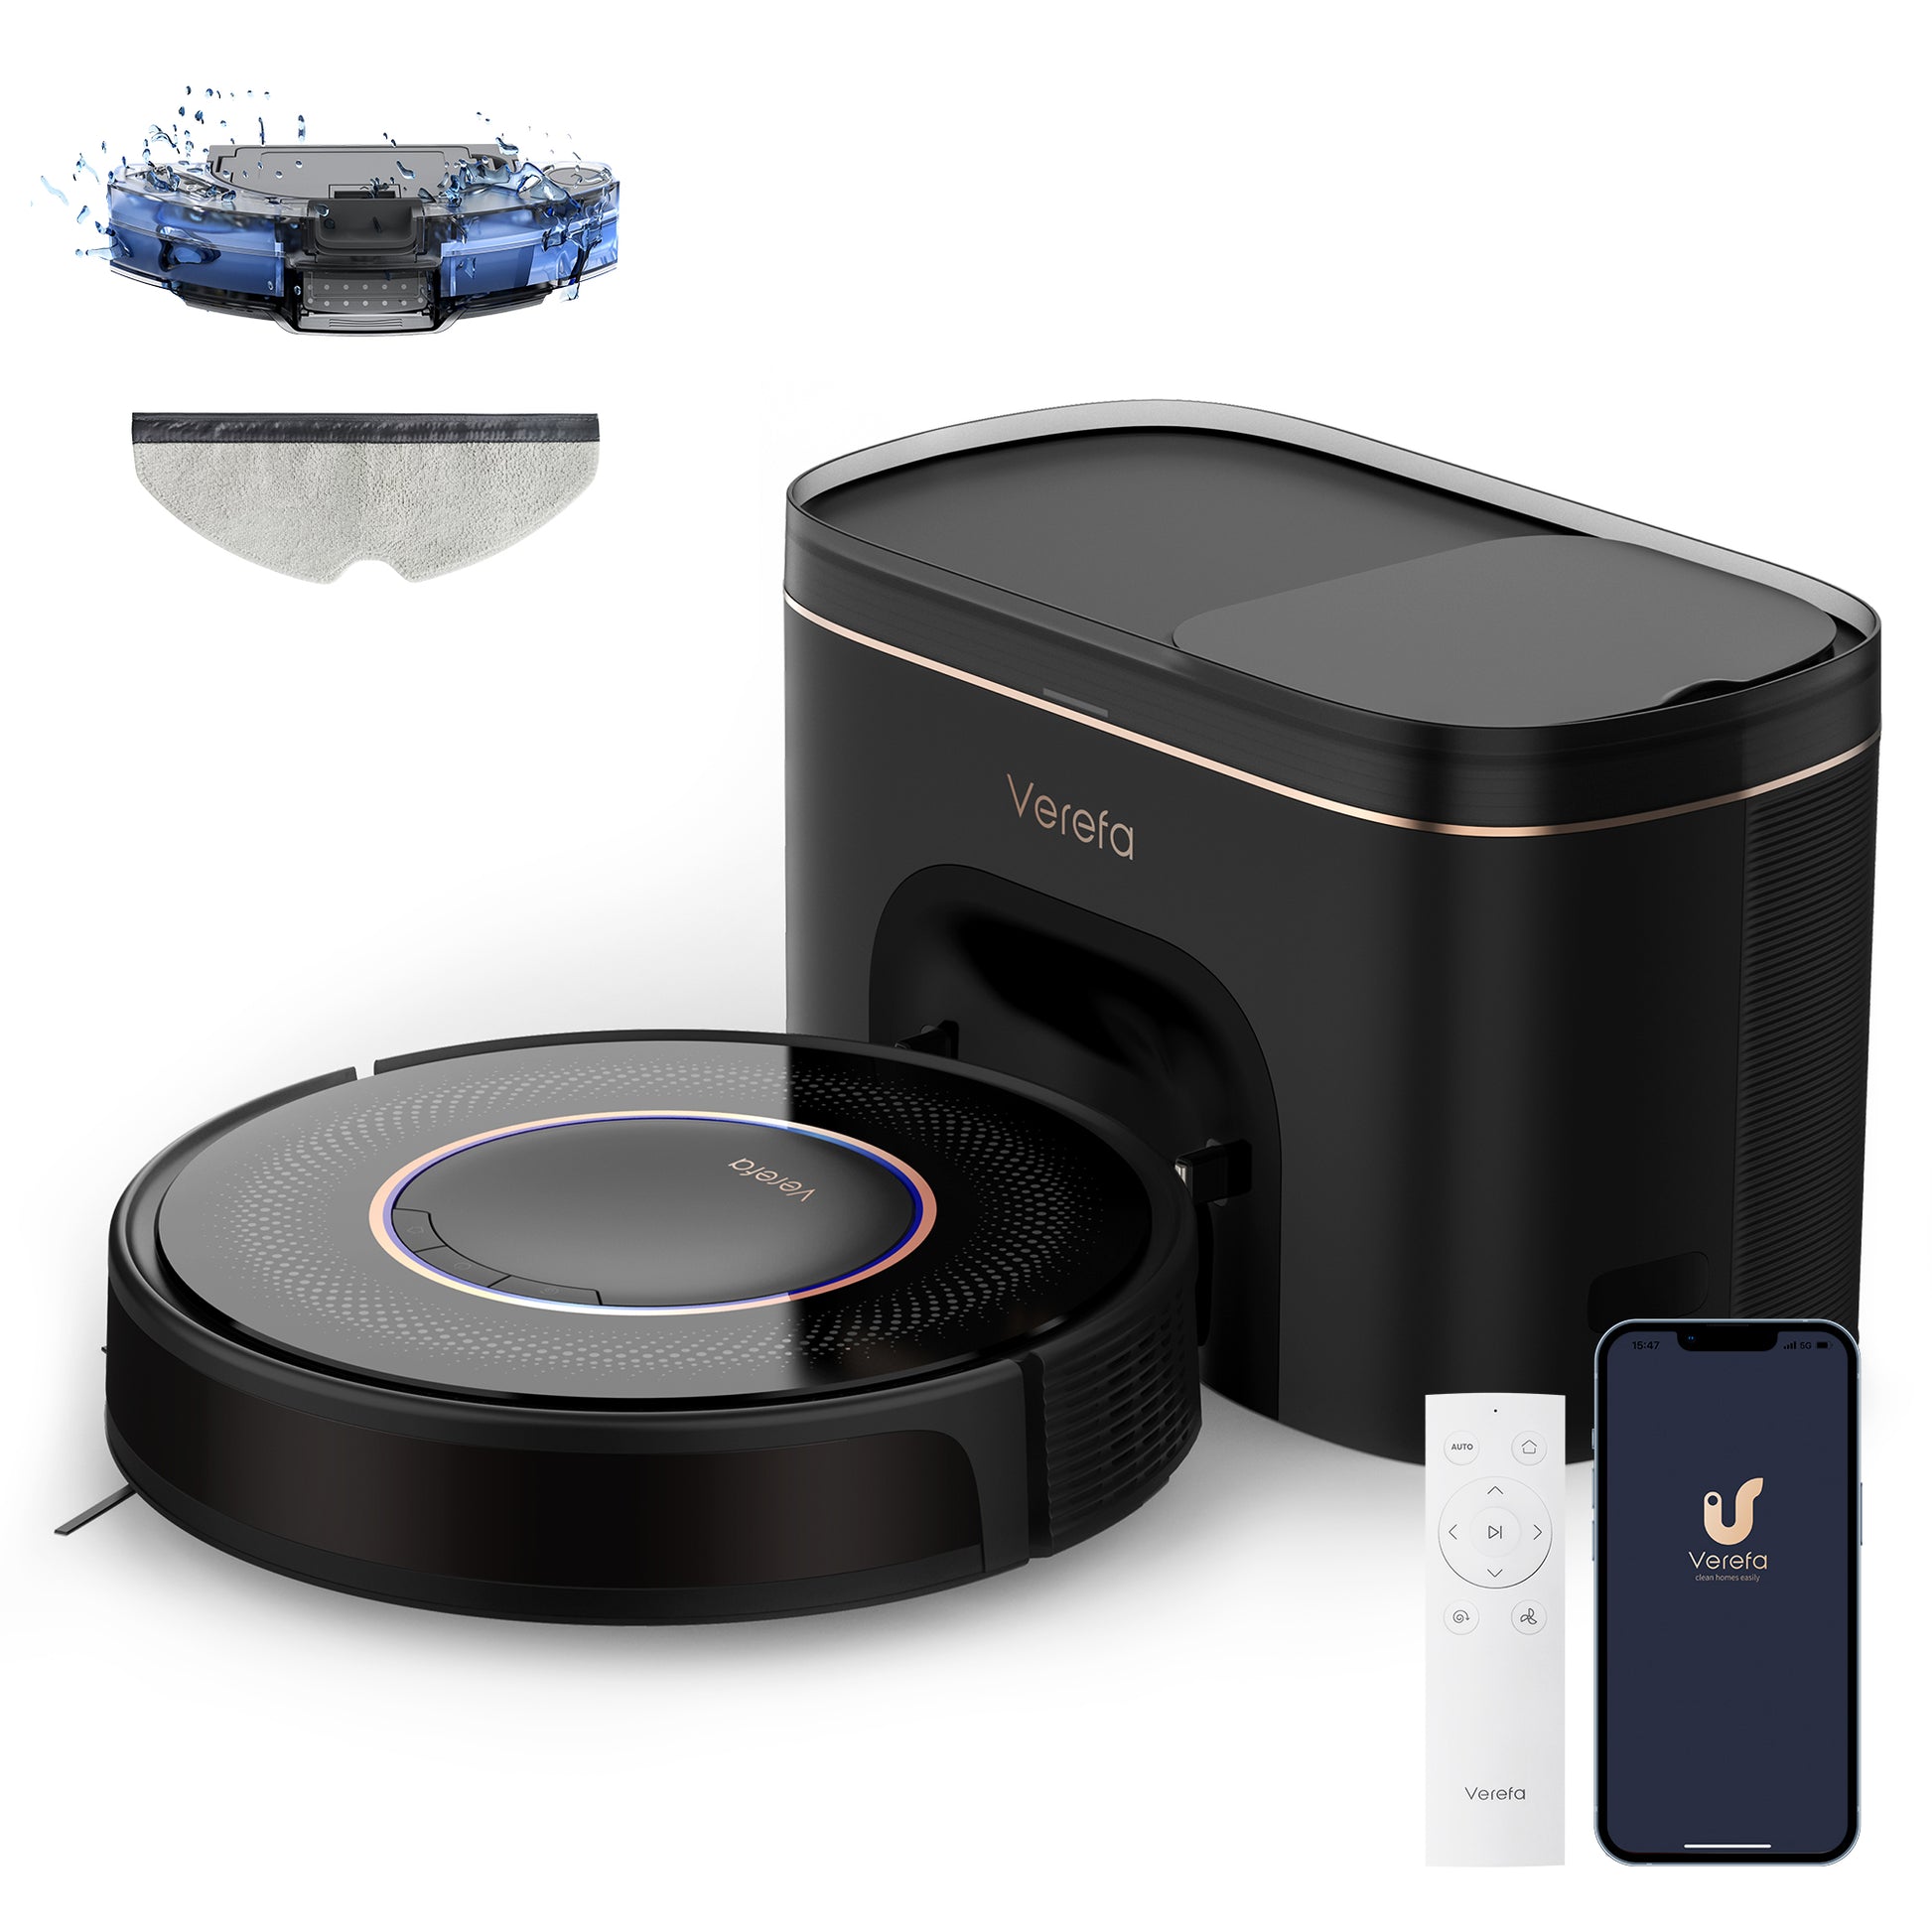  iRobot Roomba 614 Robot Vacuum- Good for Pet Hair